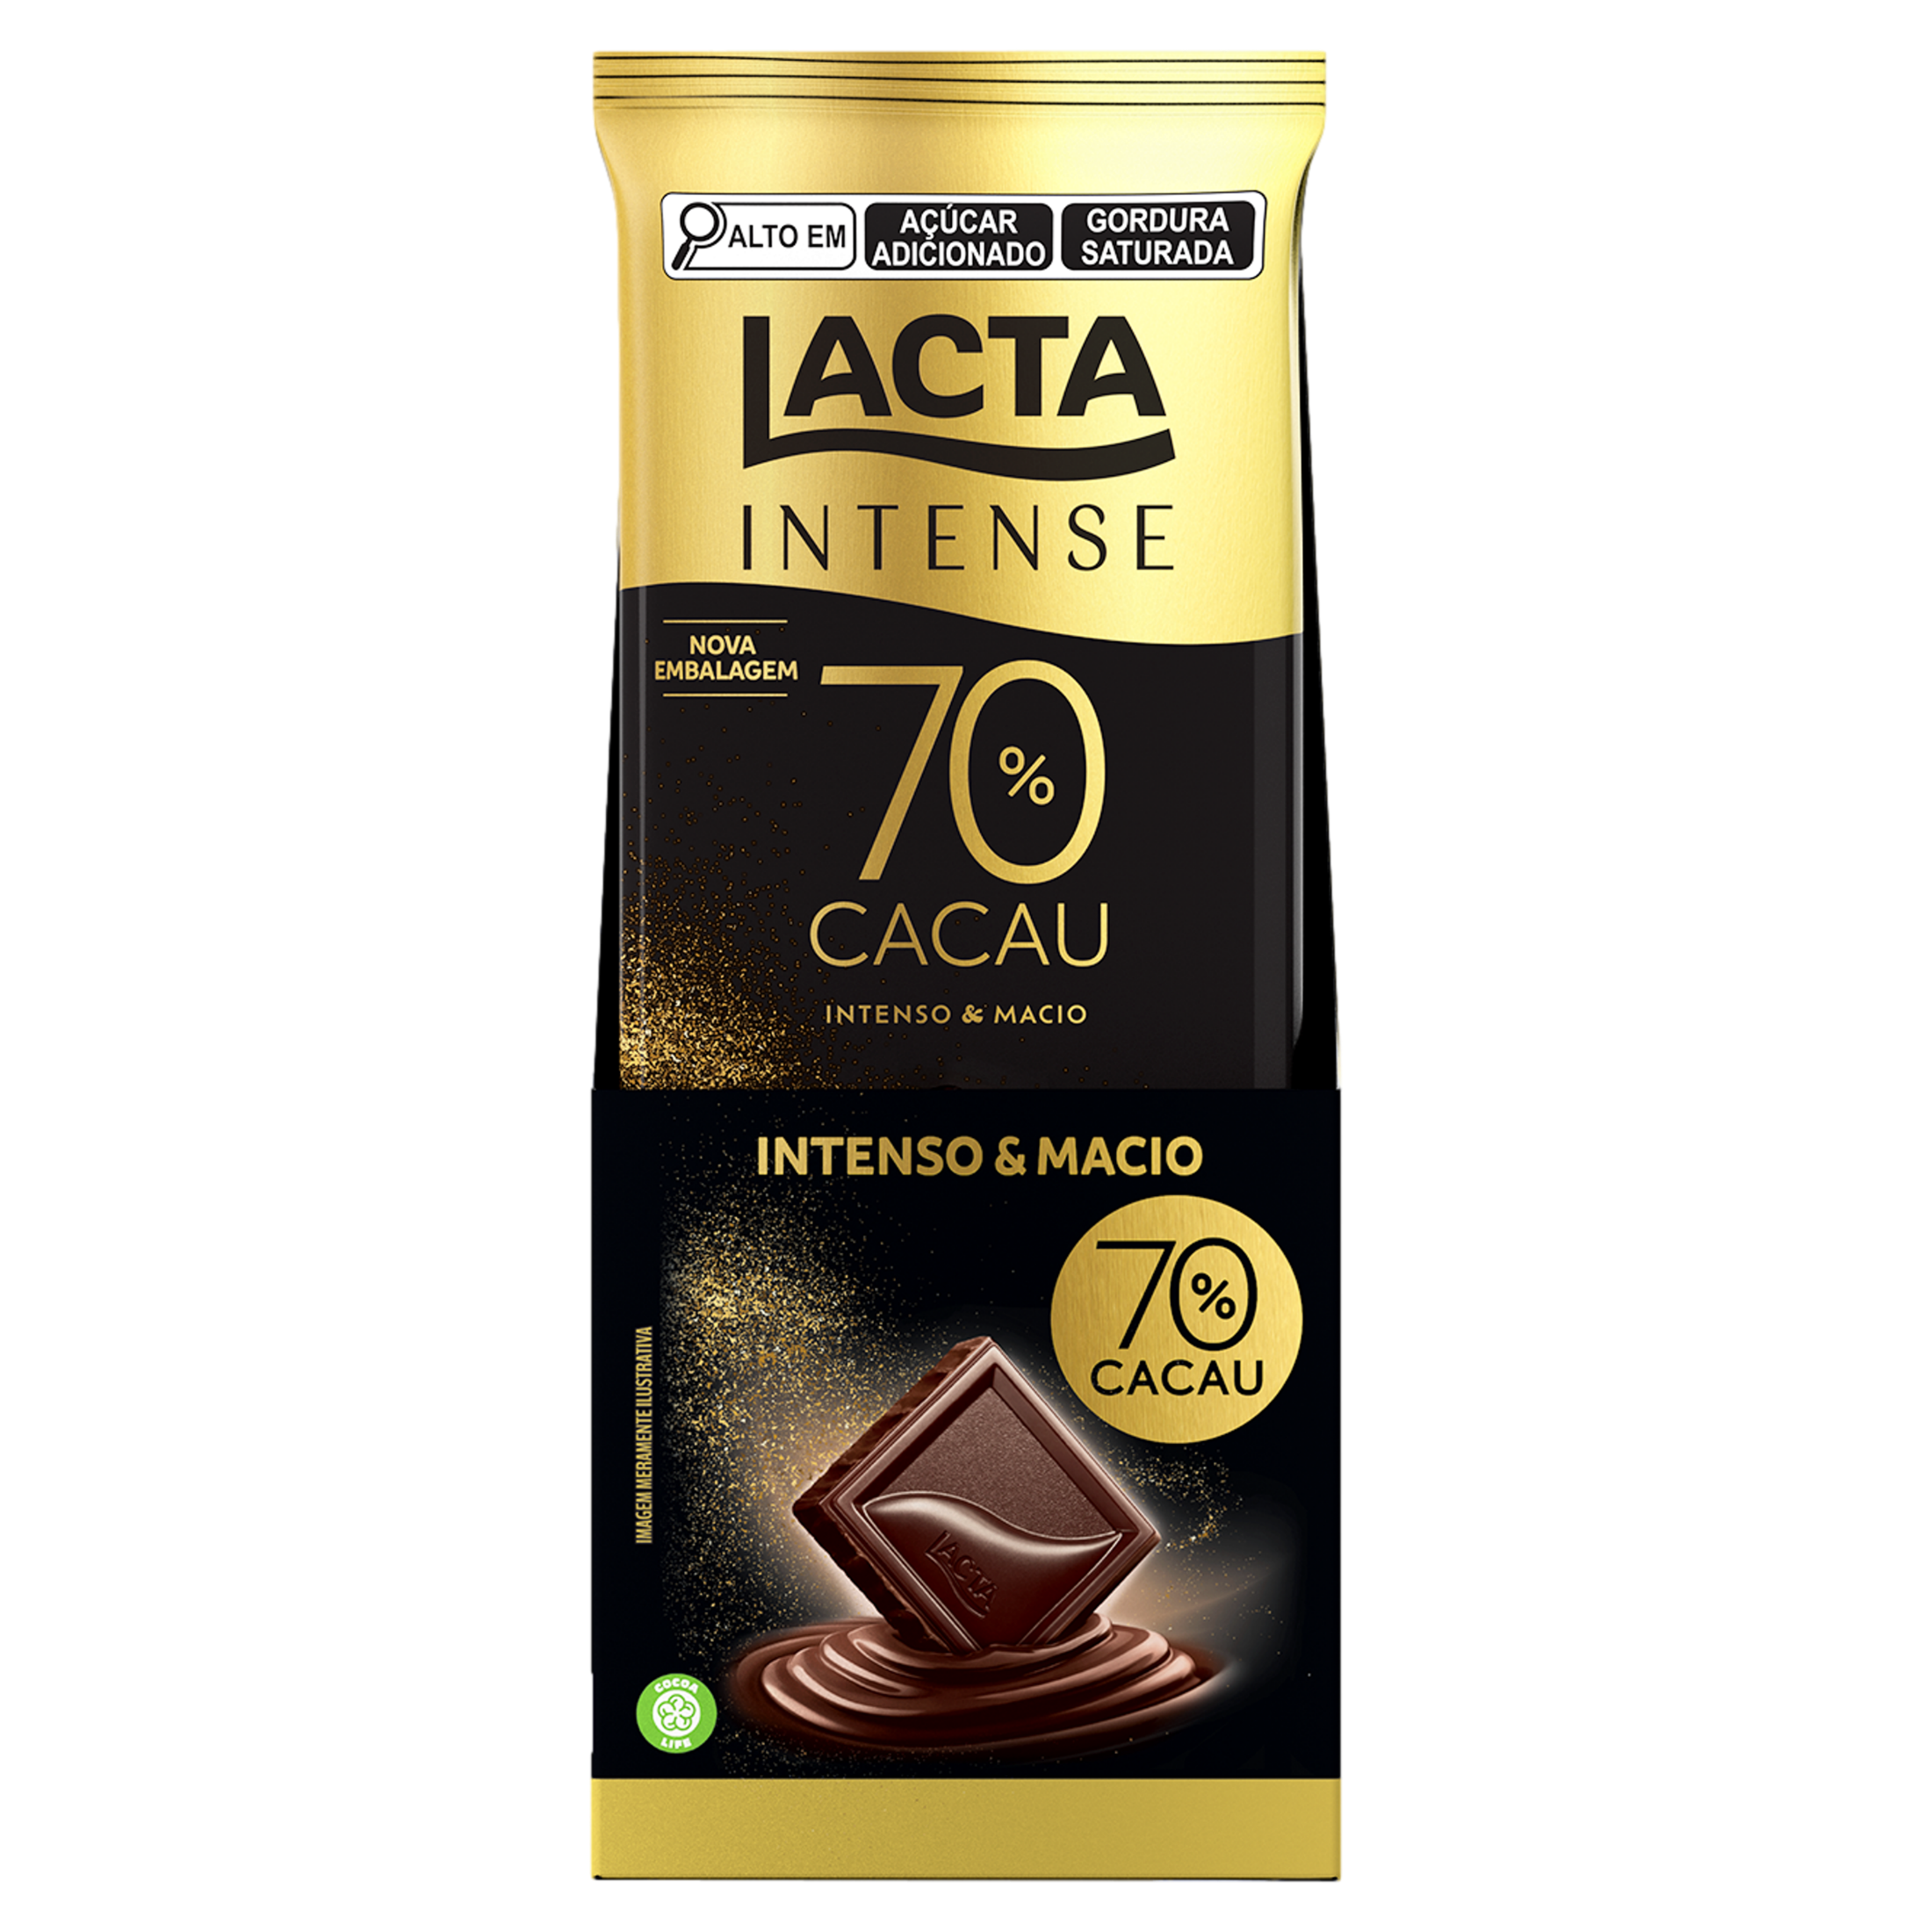 7622210529985 - CHOCOLATE 70% CACAU LACTA INTENSE PACOTE 85G